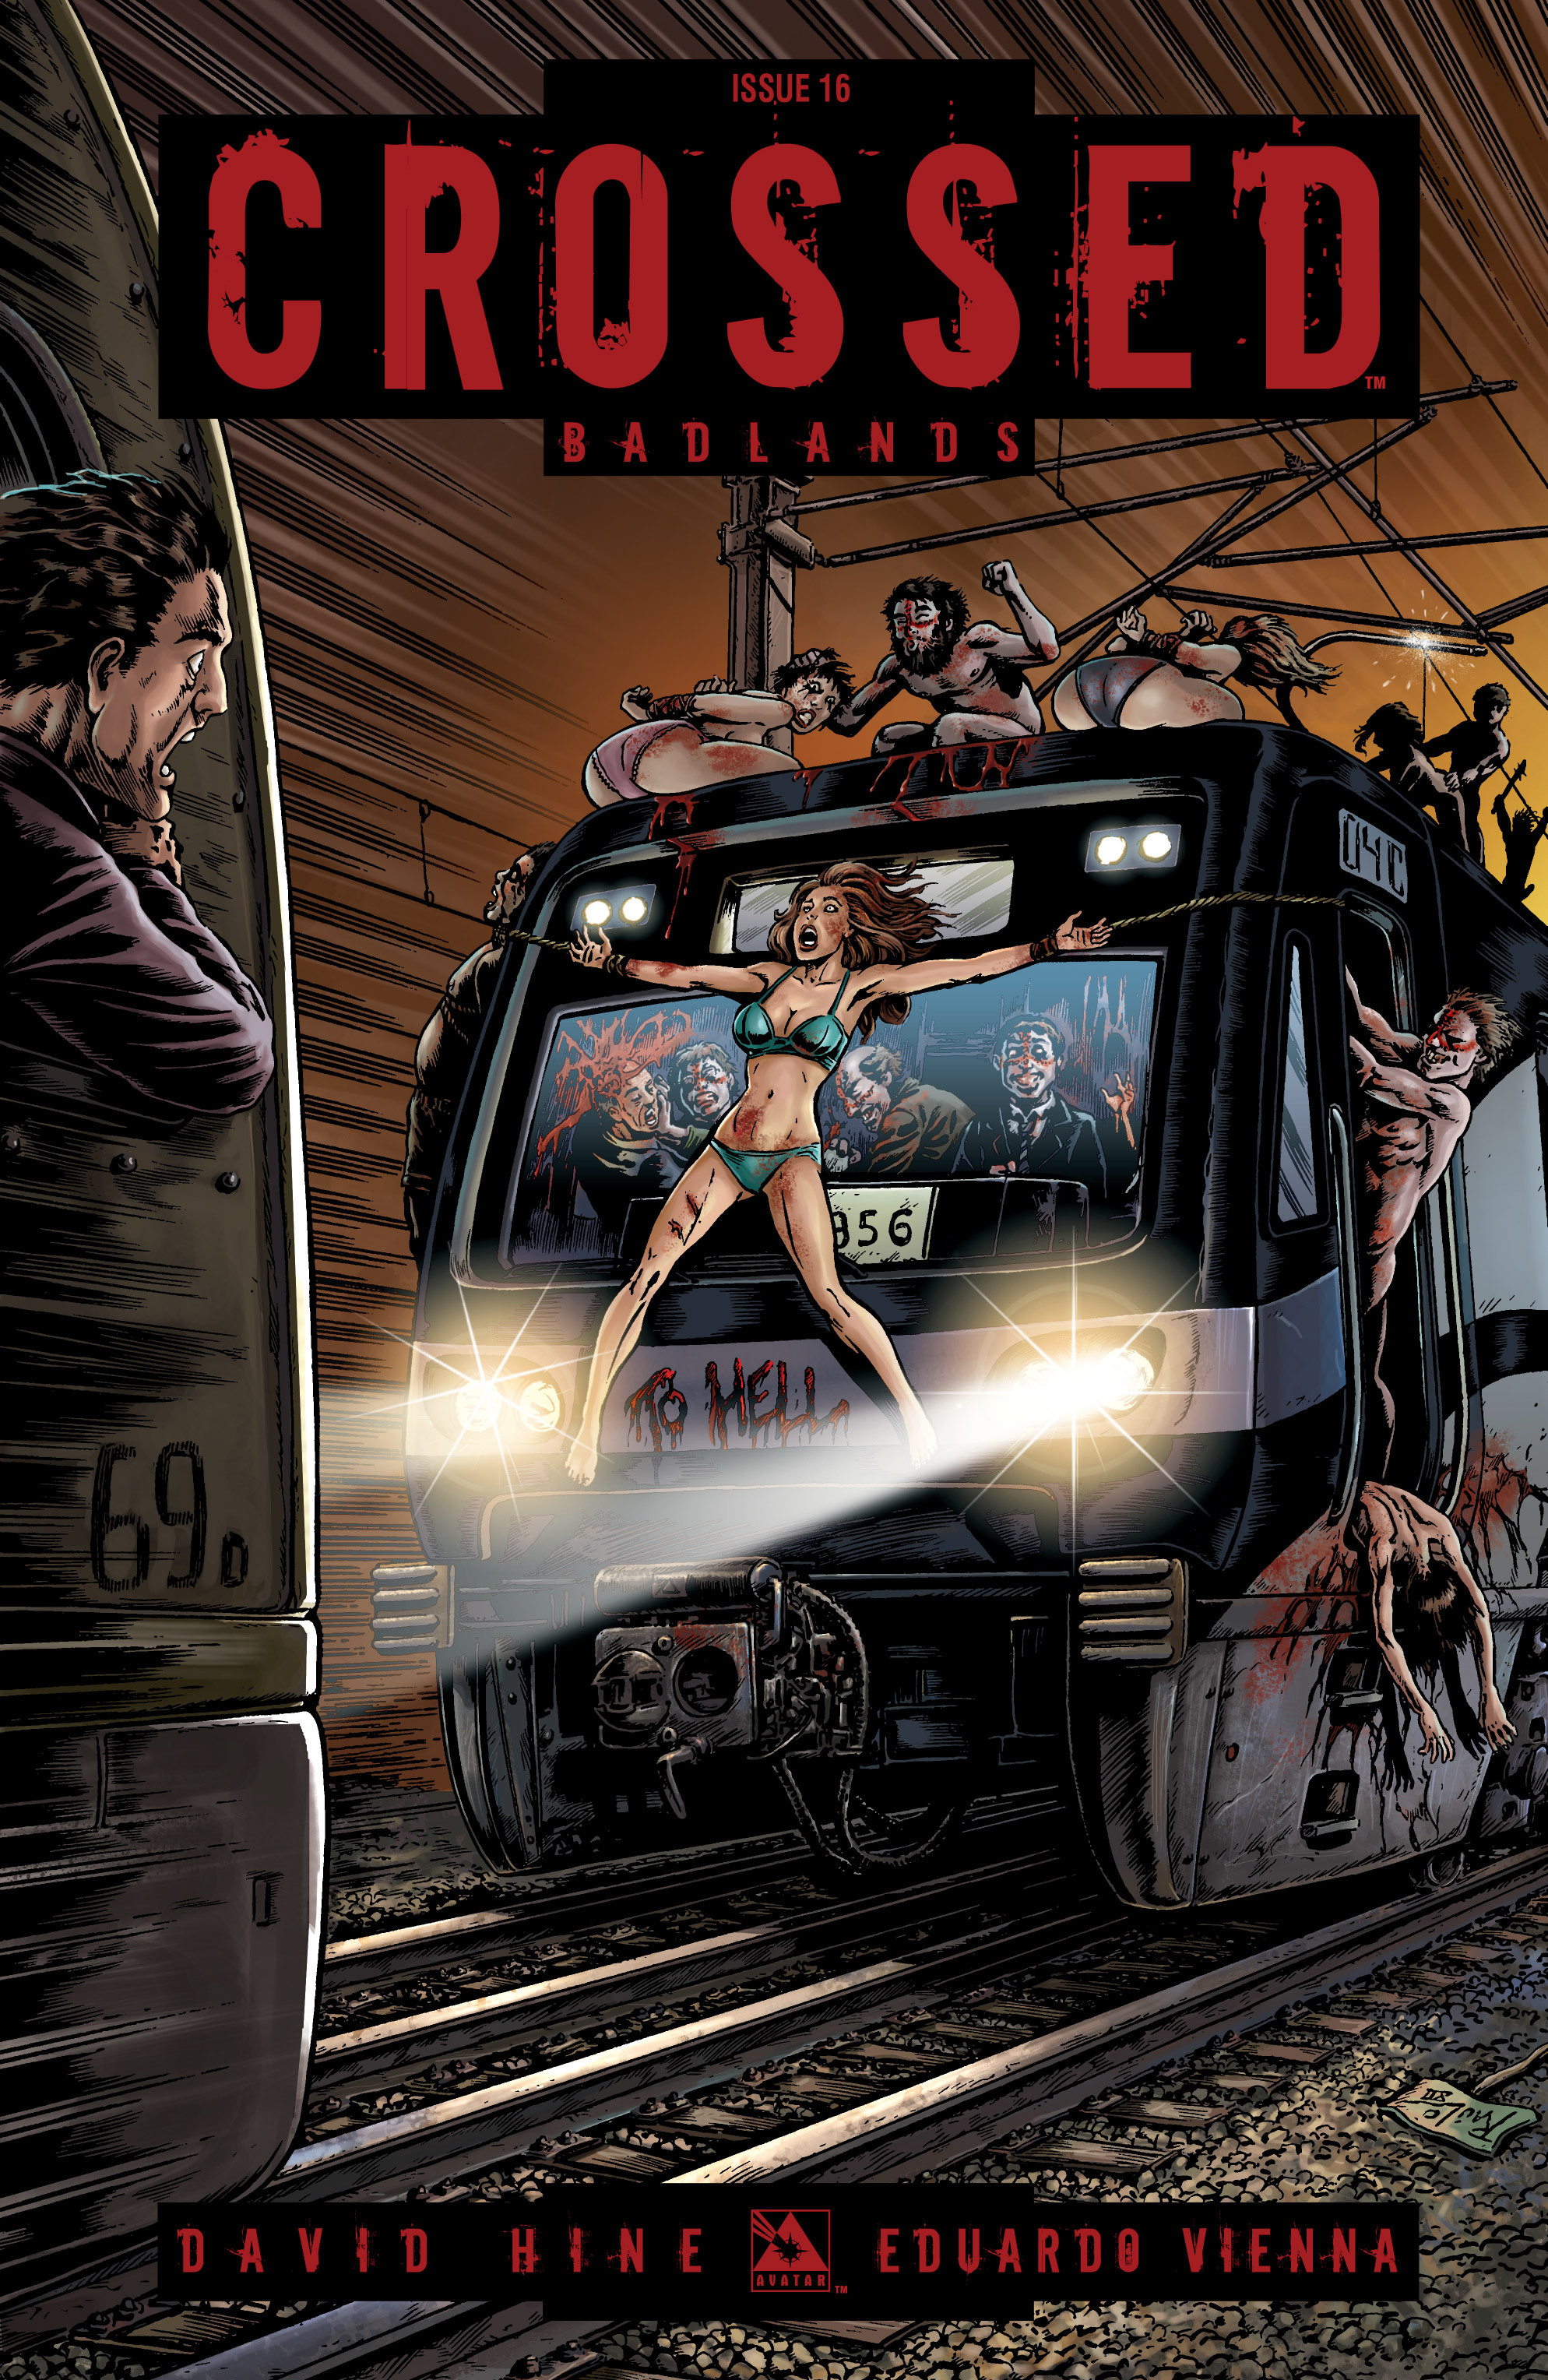 Read online Crossed: Badlands comic -  Issue #16 - 1